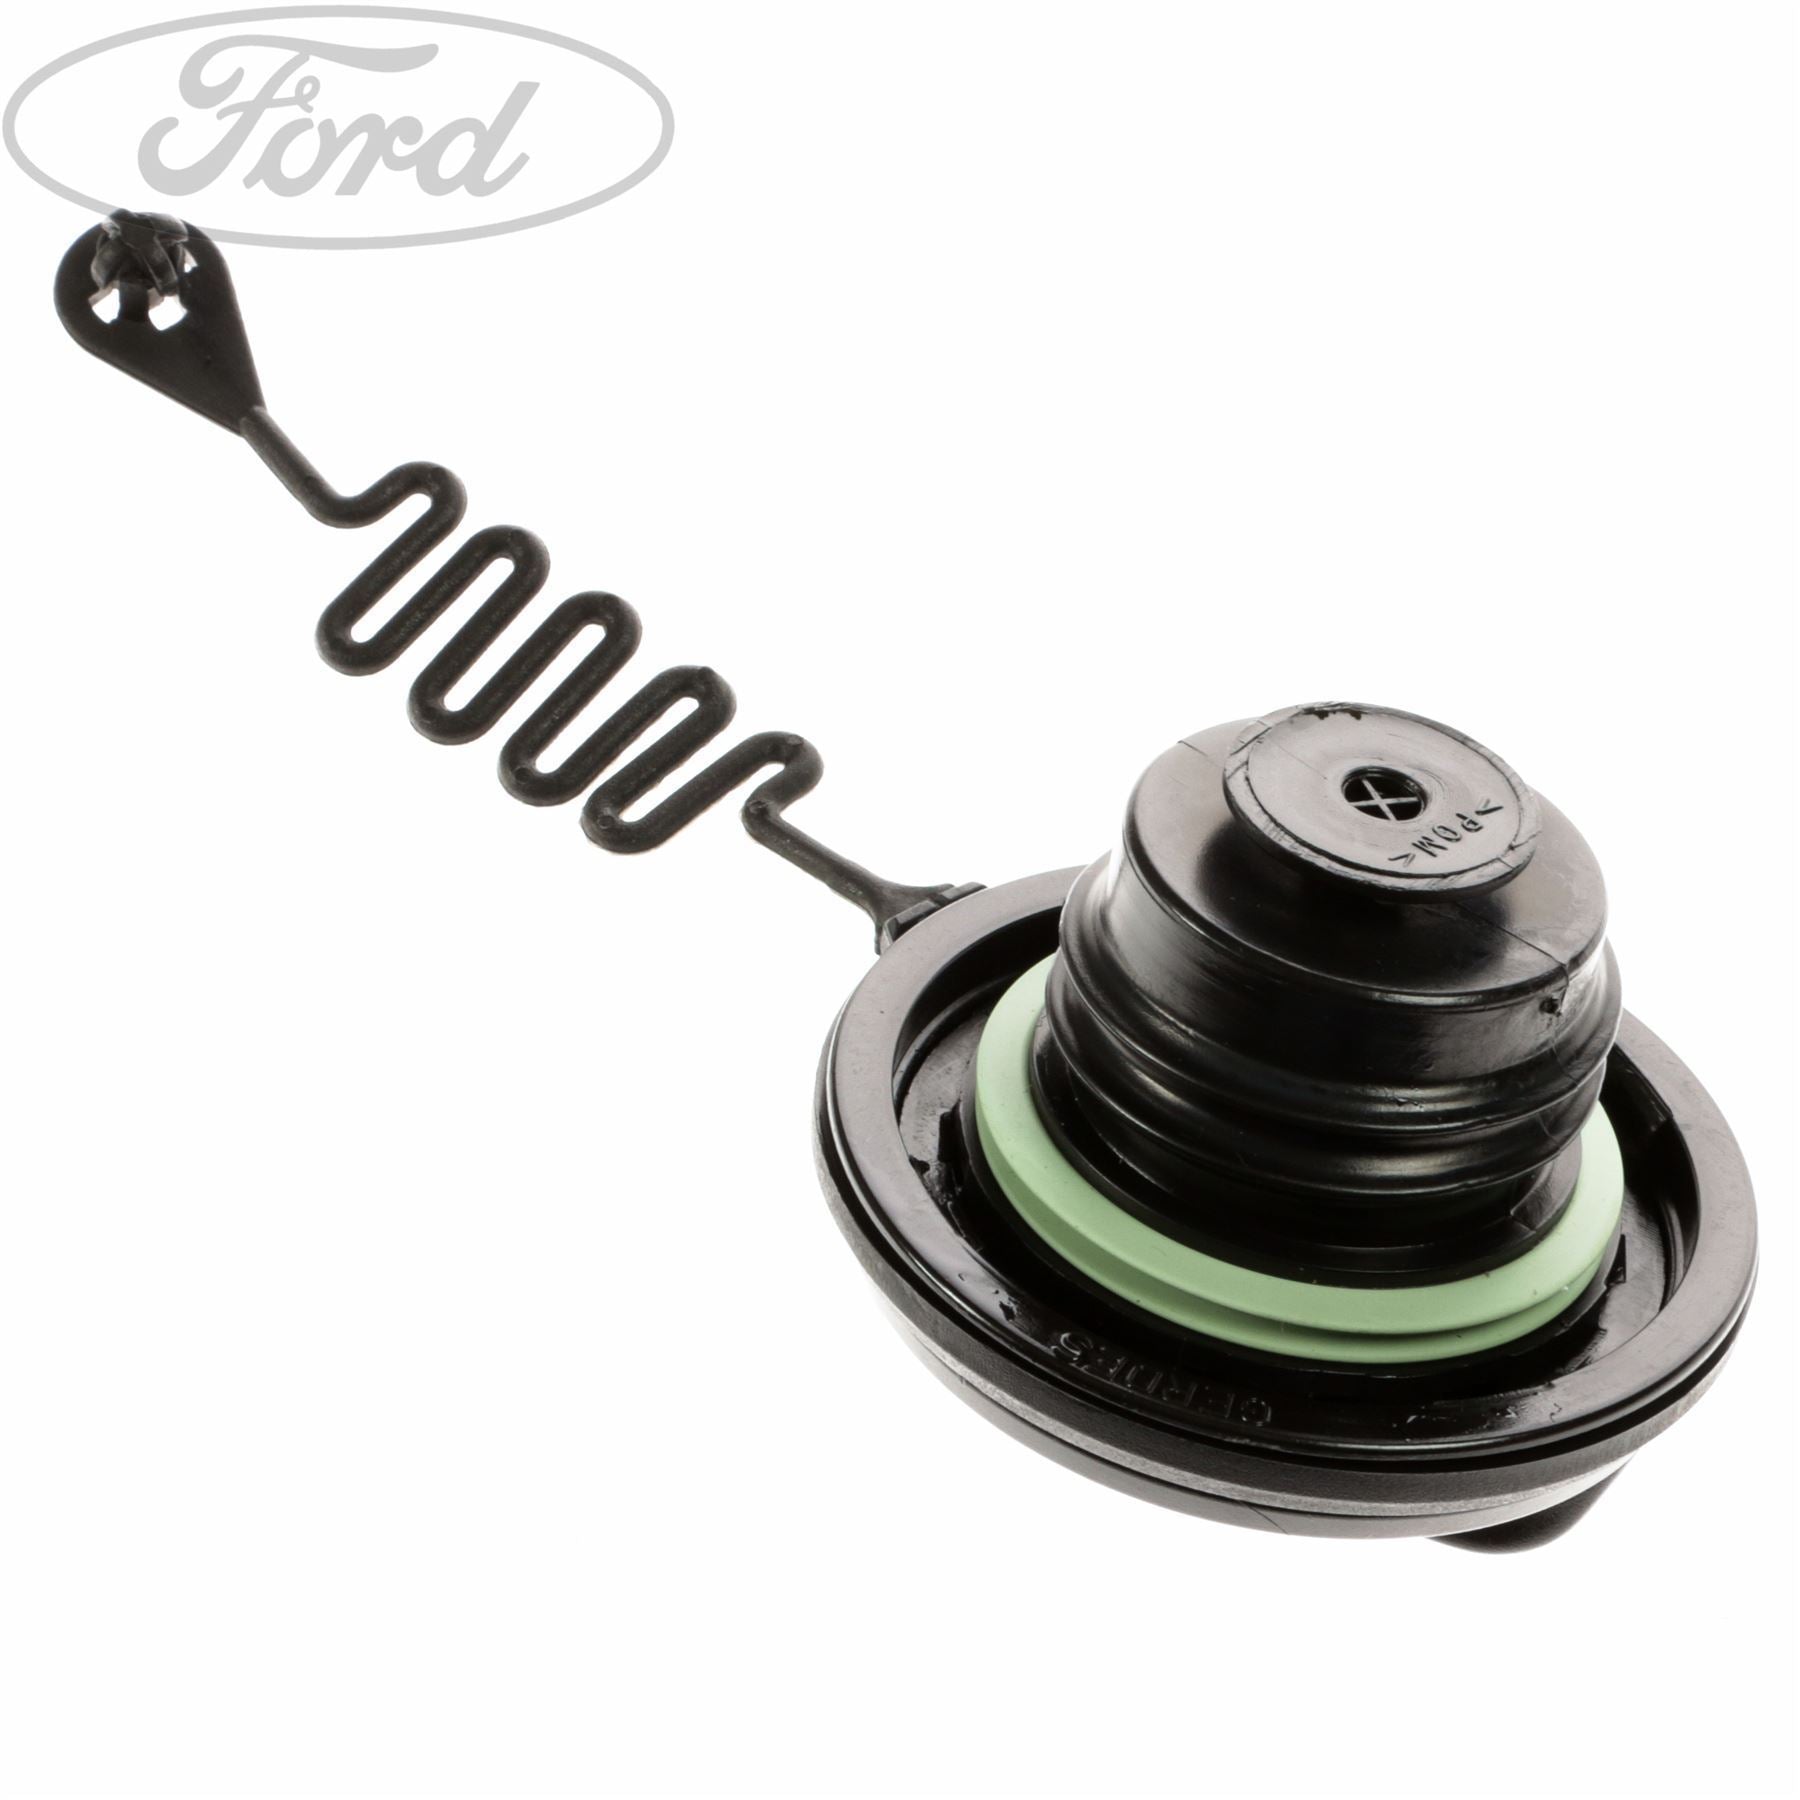 Ford FOCUS FUEL TANK FILLER CAP - 5133970